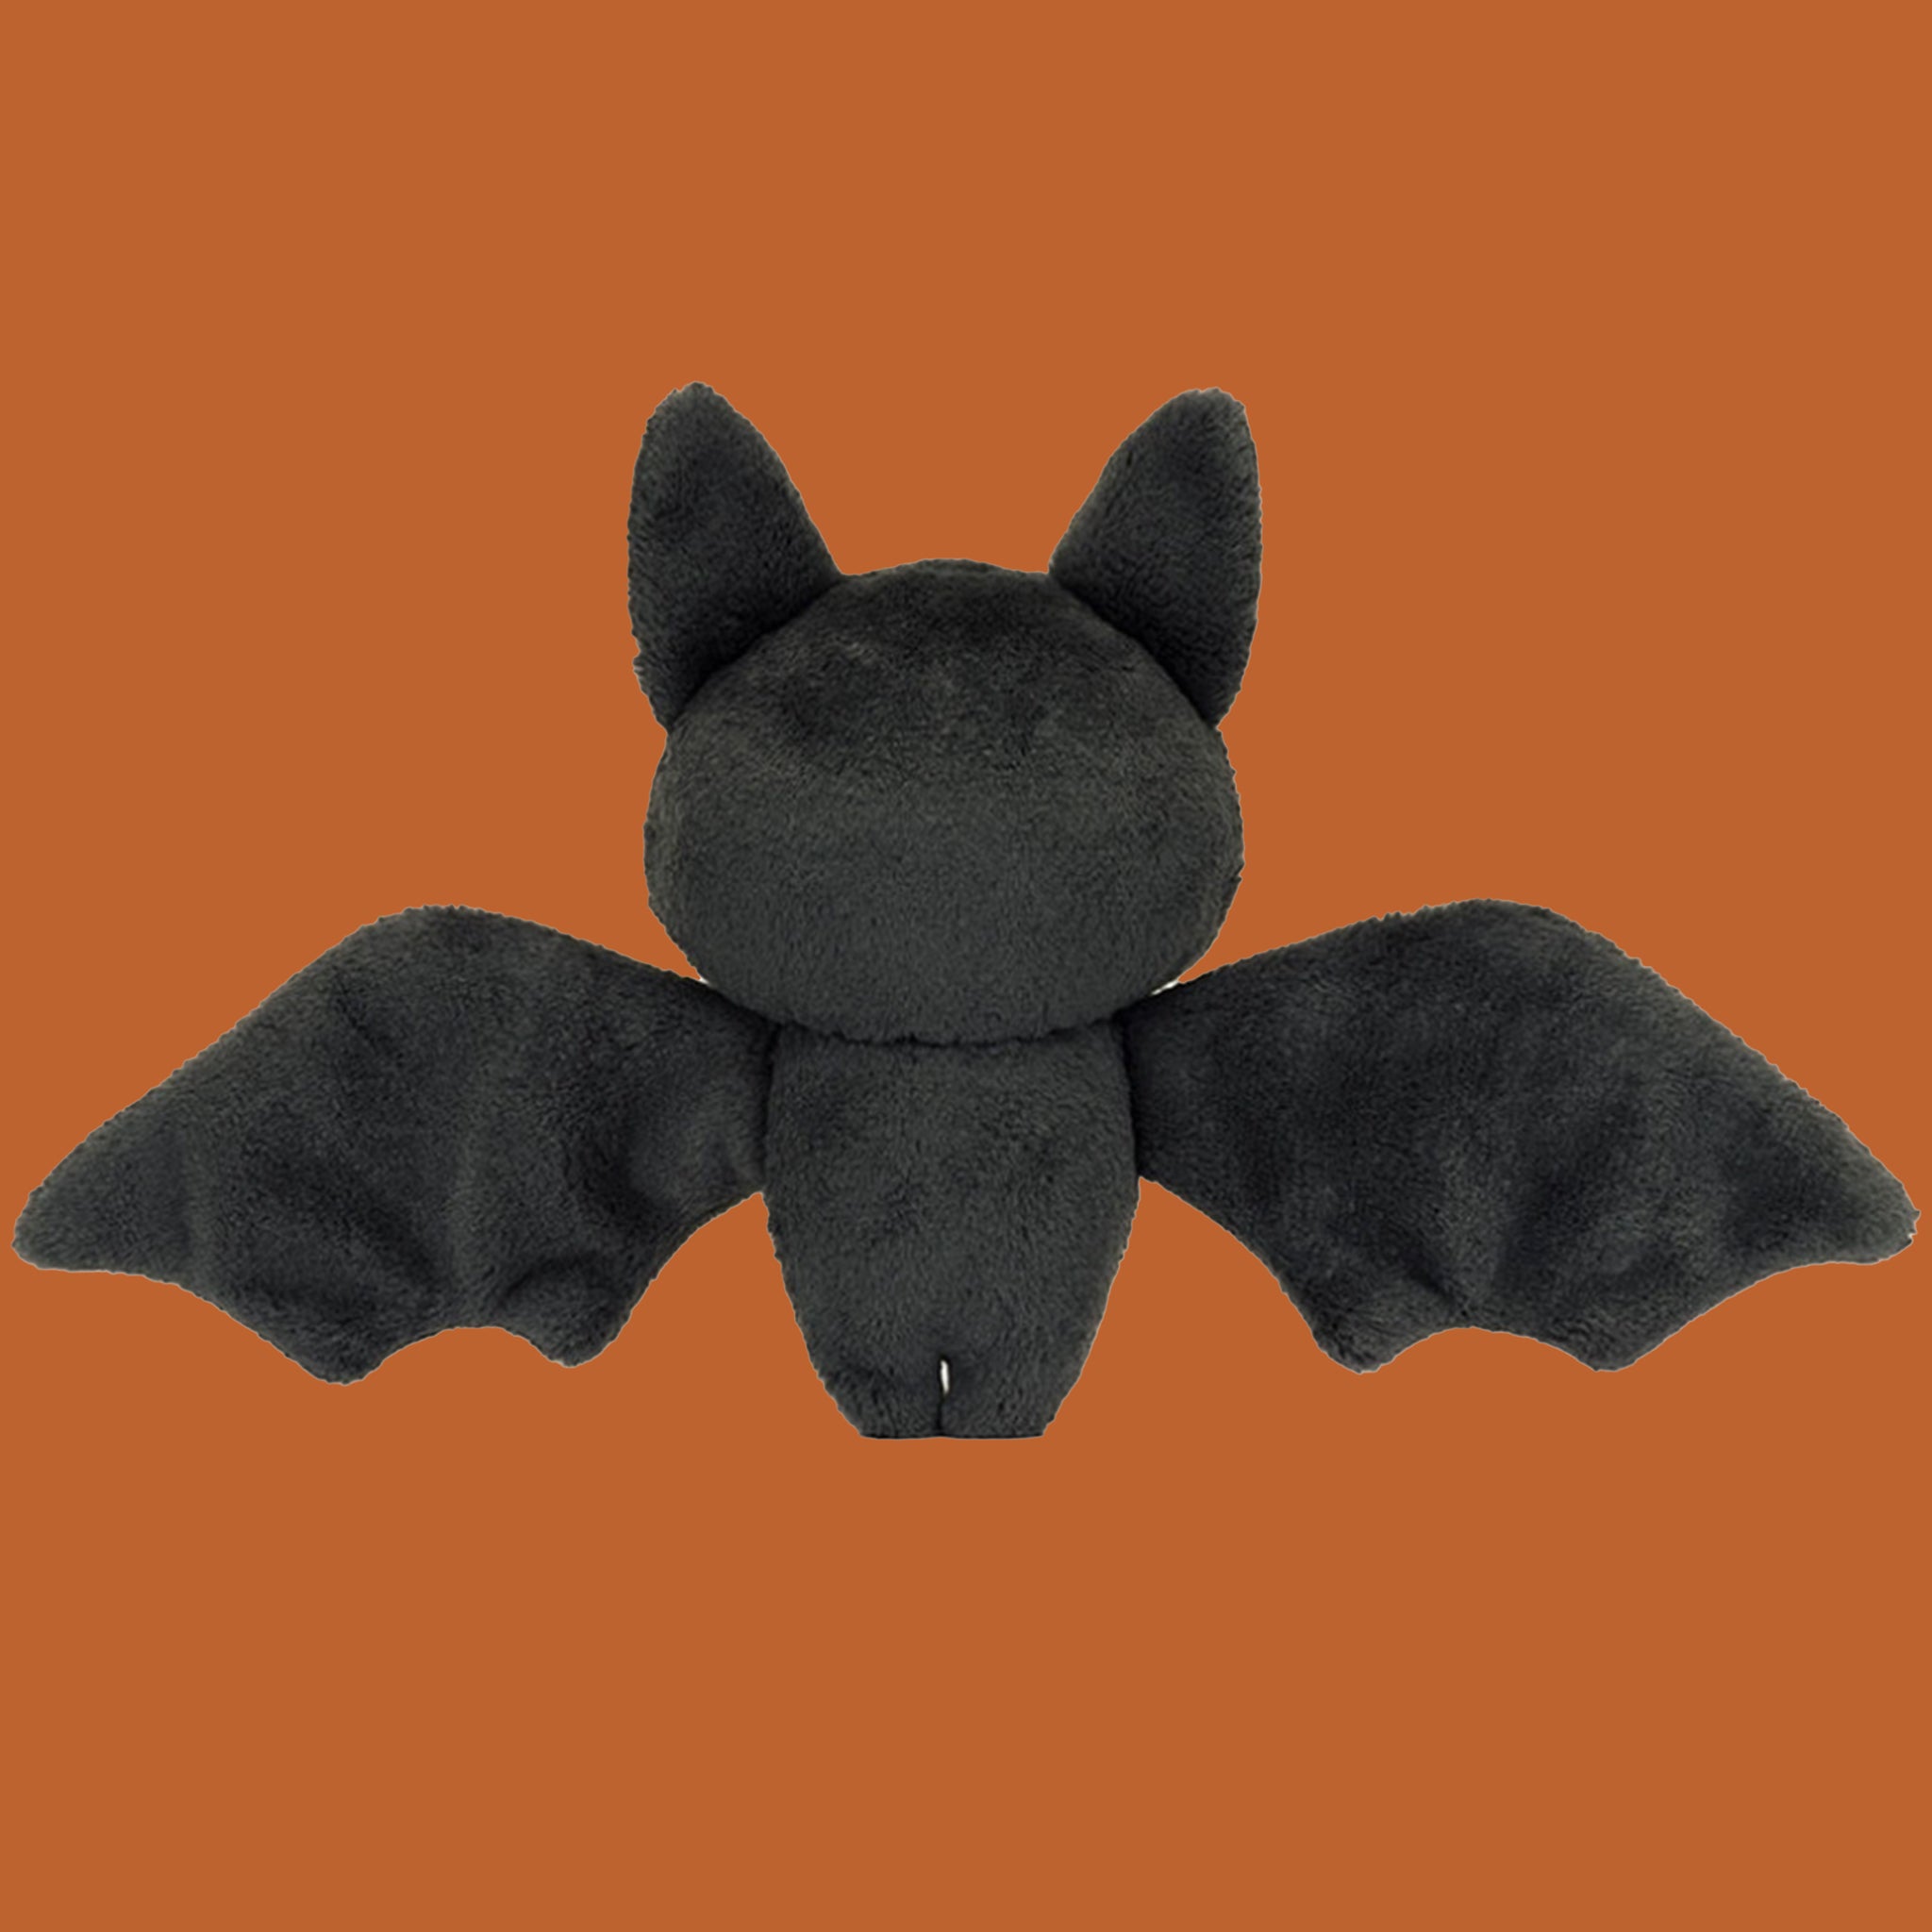 A black bat shaped skeleton stuffed toy.